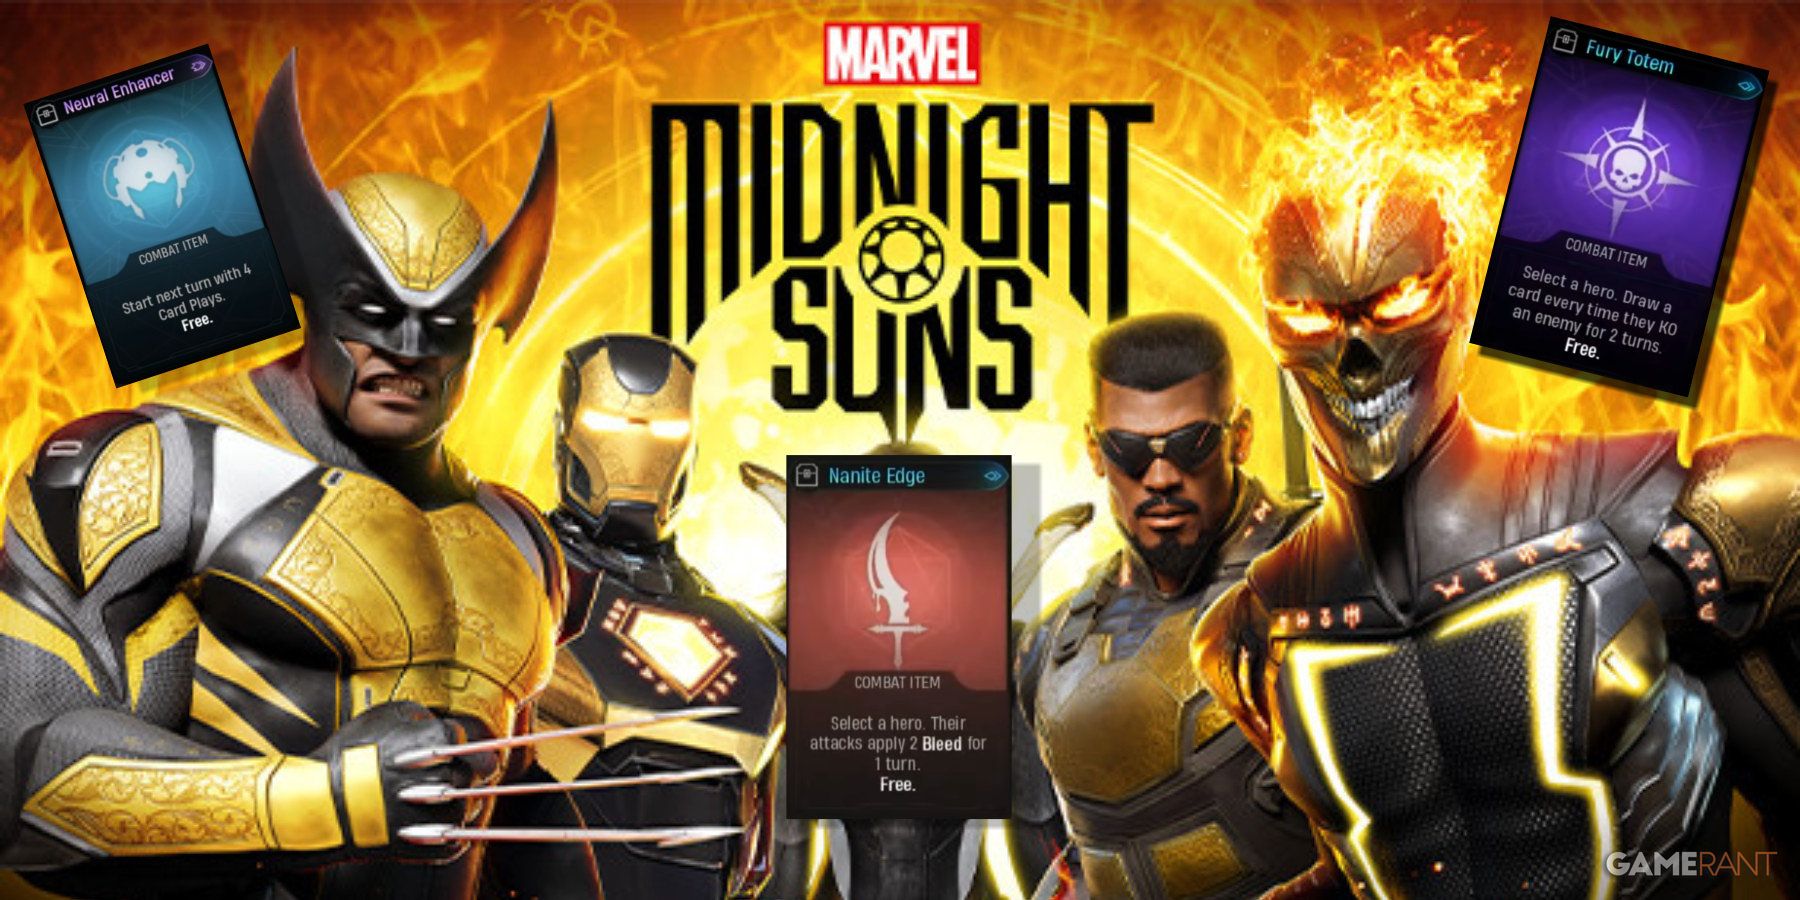 Marvel Midnight Suns Combat Items